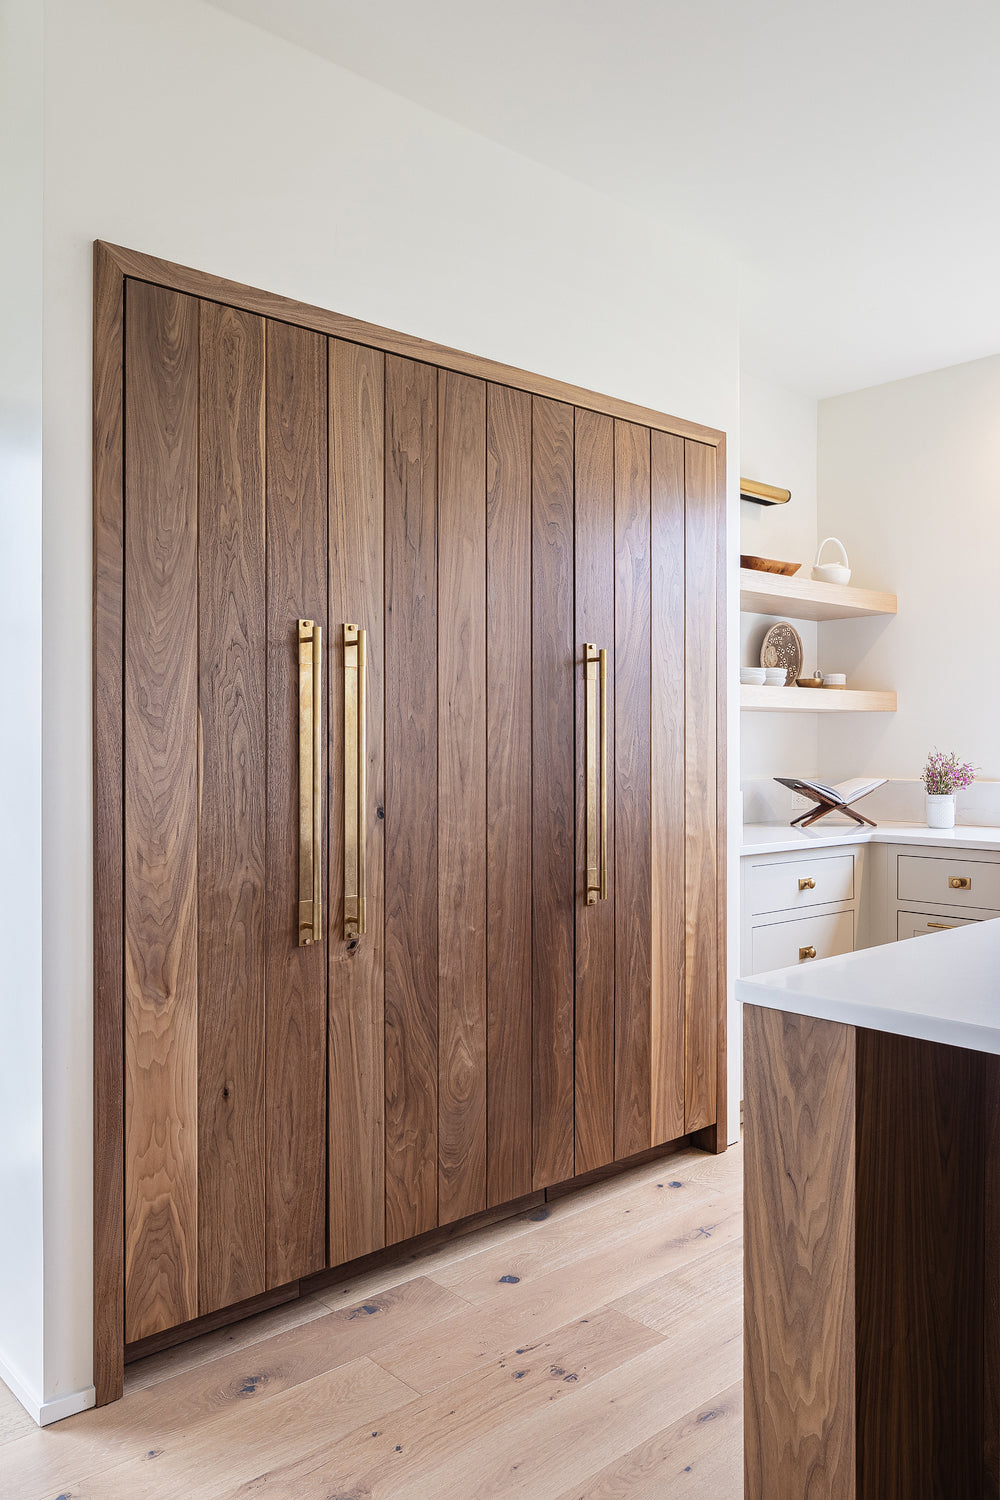 Walnut kitchen cabinetry by Edgework Creative